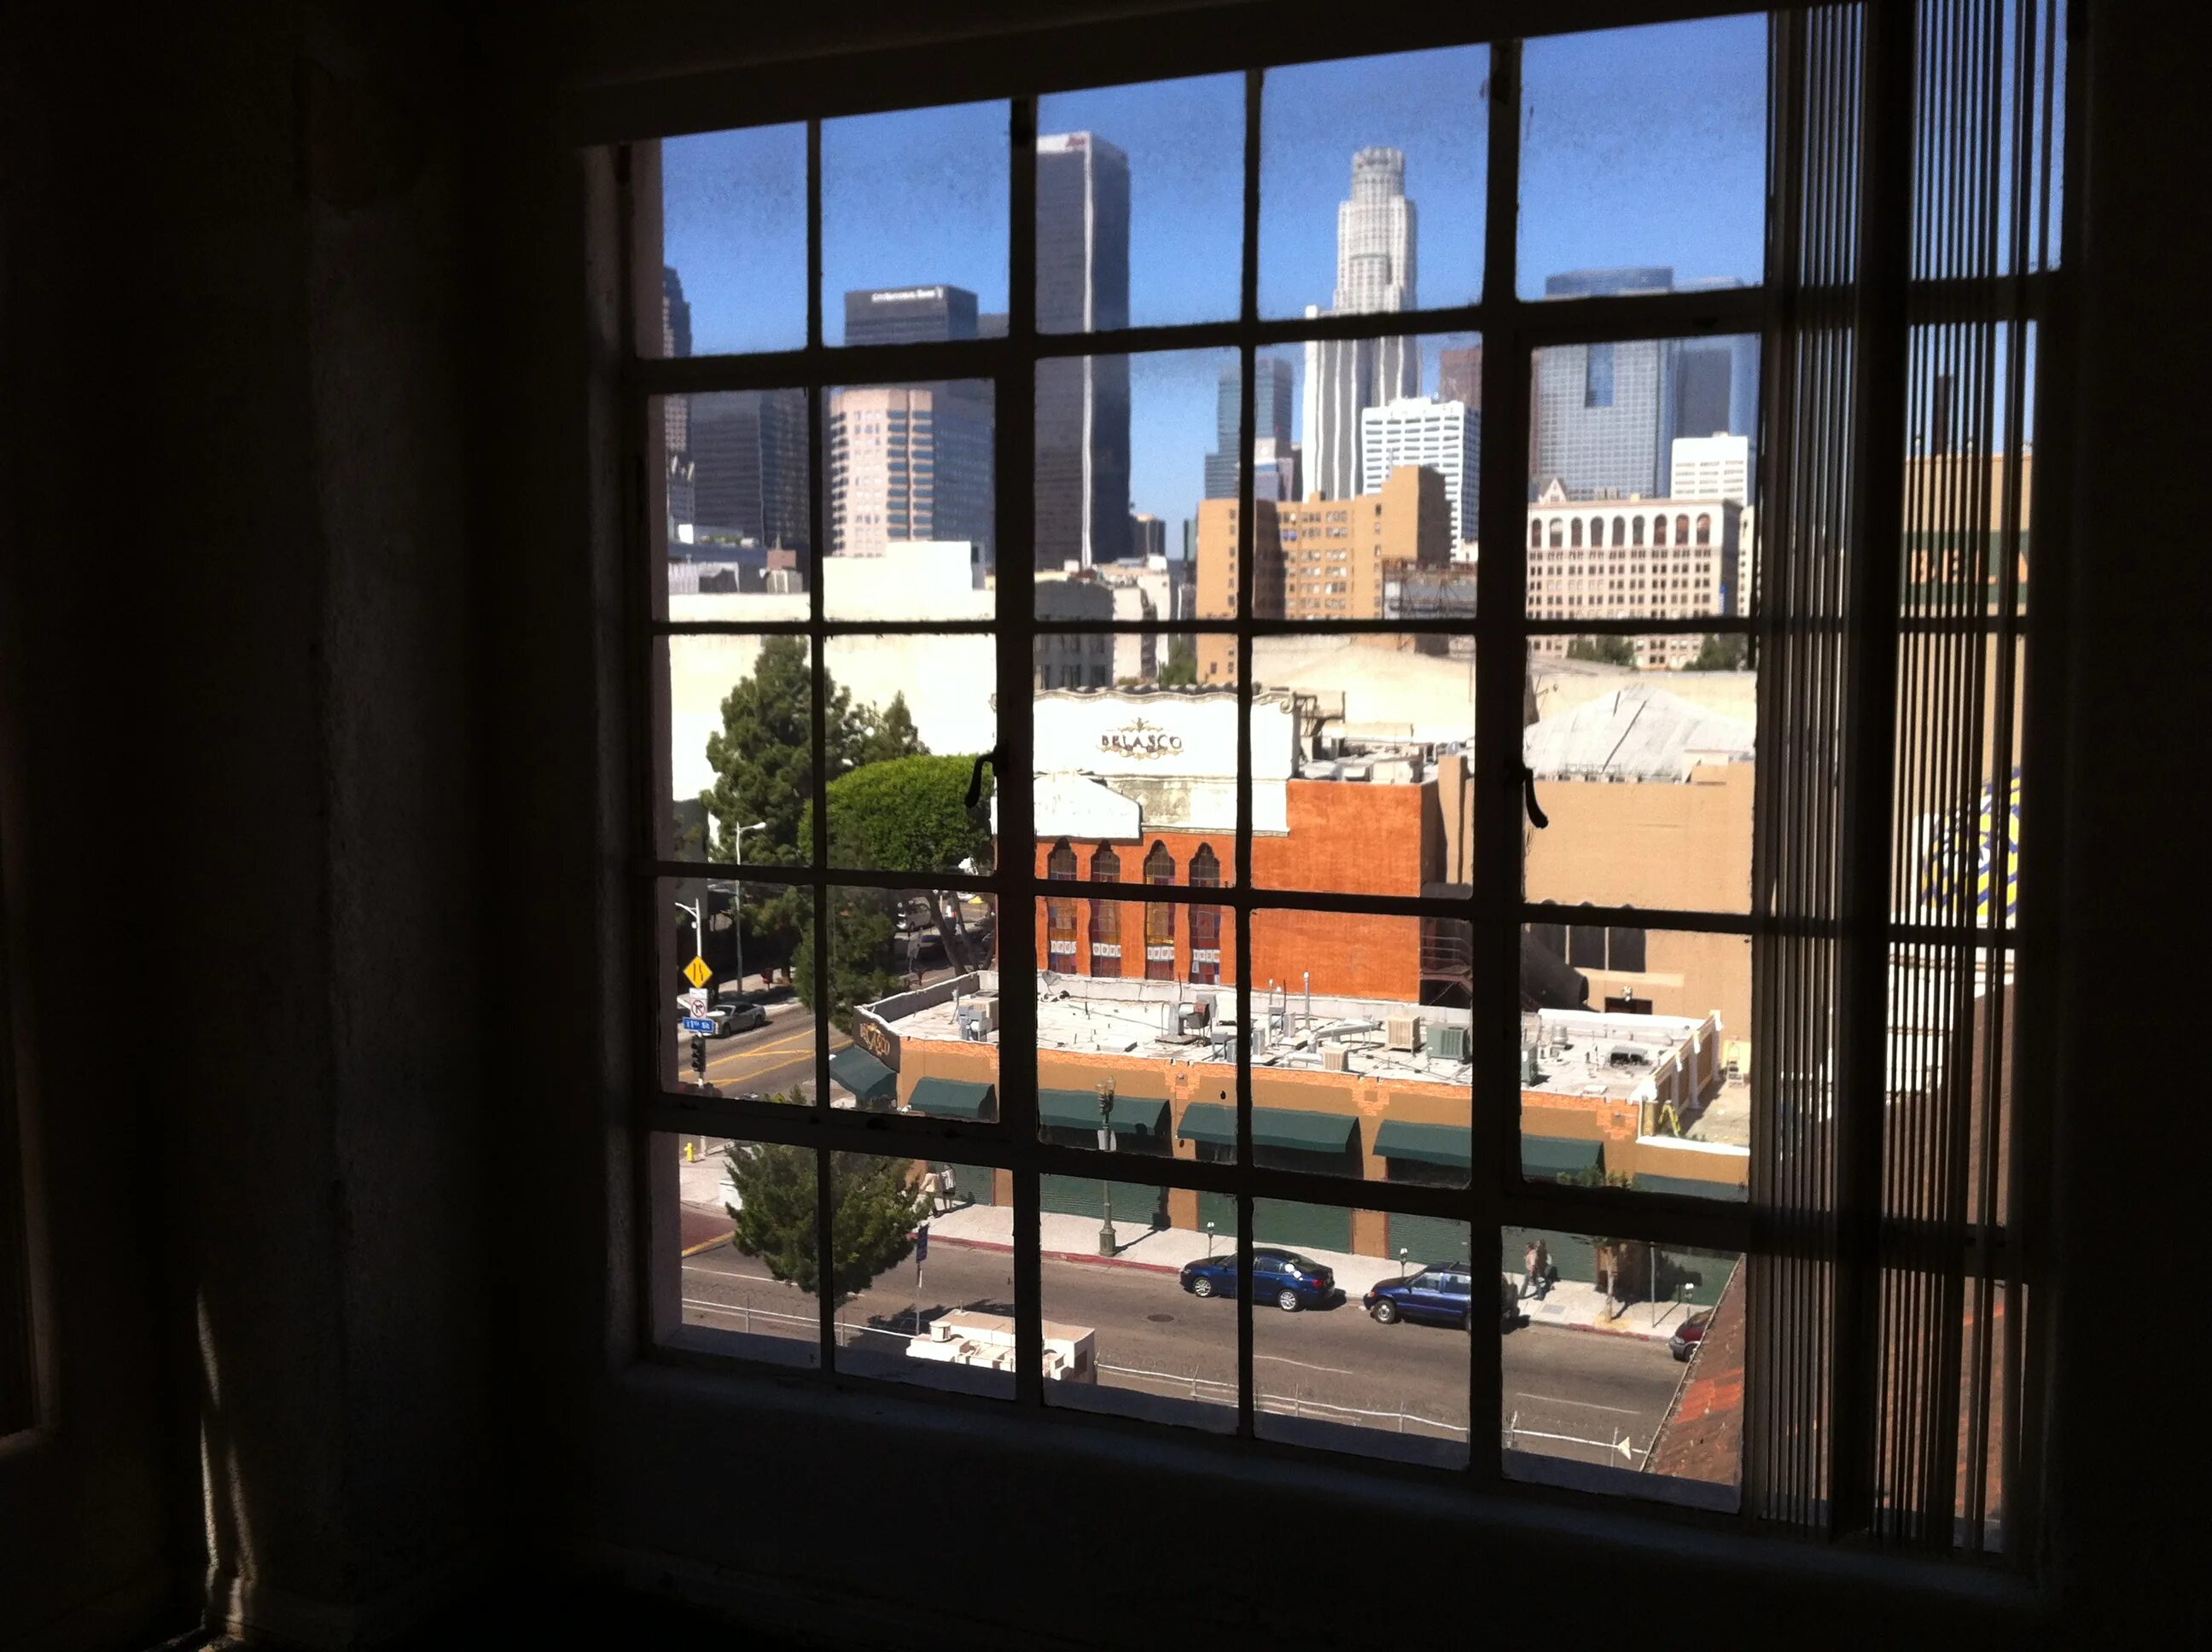 City Window. Apartment Window. Building through Window. Home Window in City. Windows side